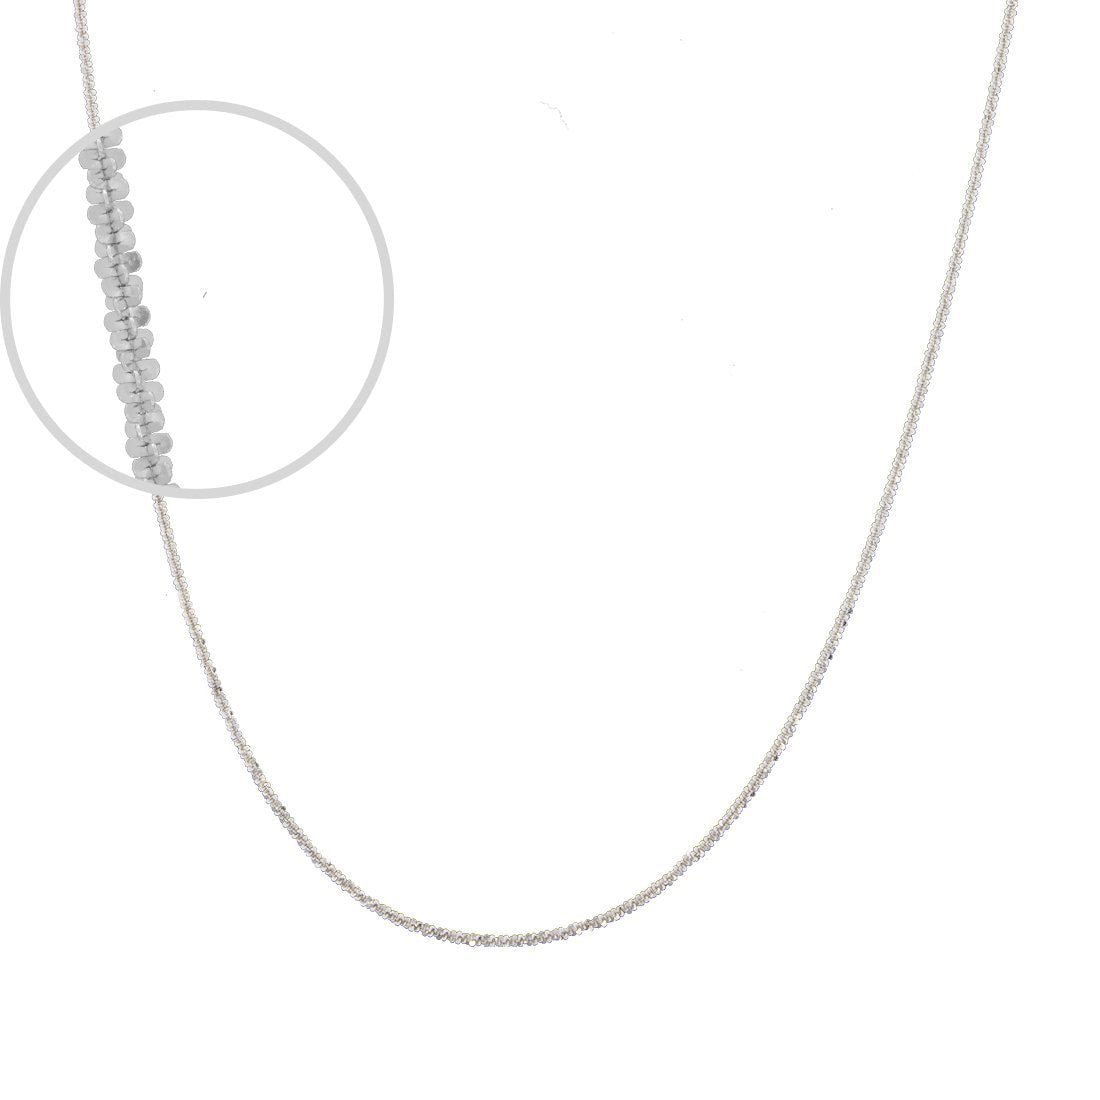 Cadena Oro Blanco 10k, Criss-Cross 45 cm, Ancho 1 mm - Infiniti Joyas